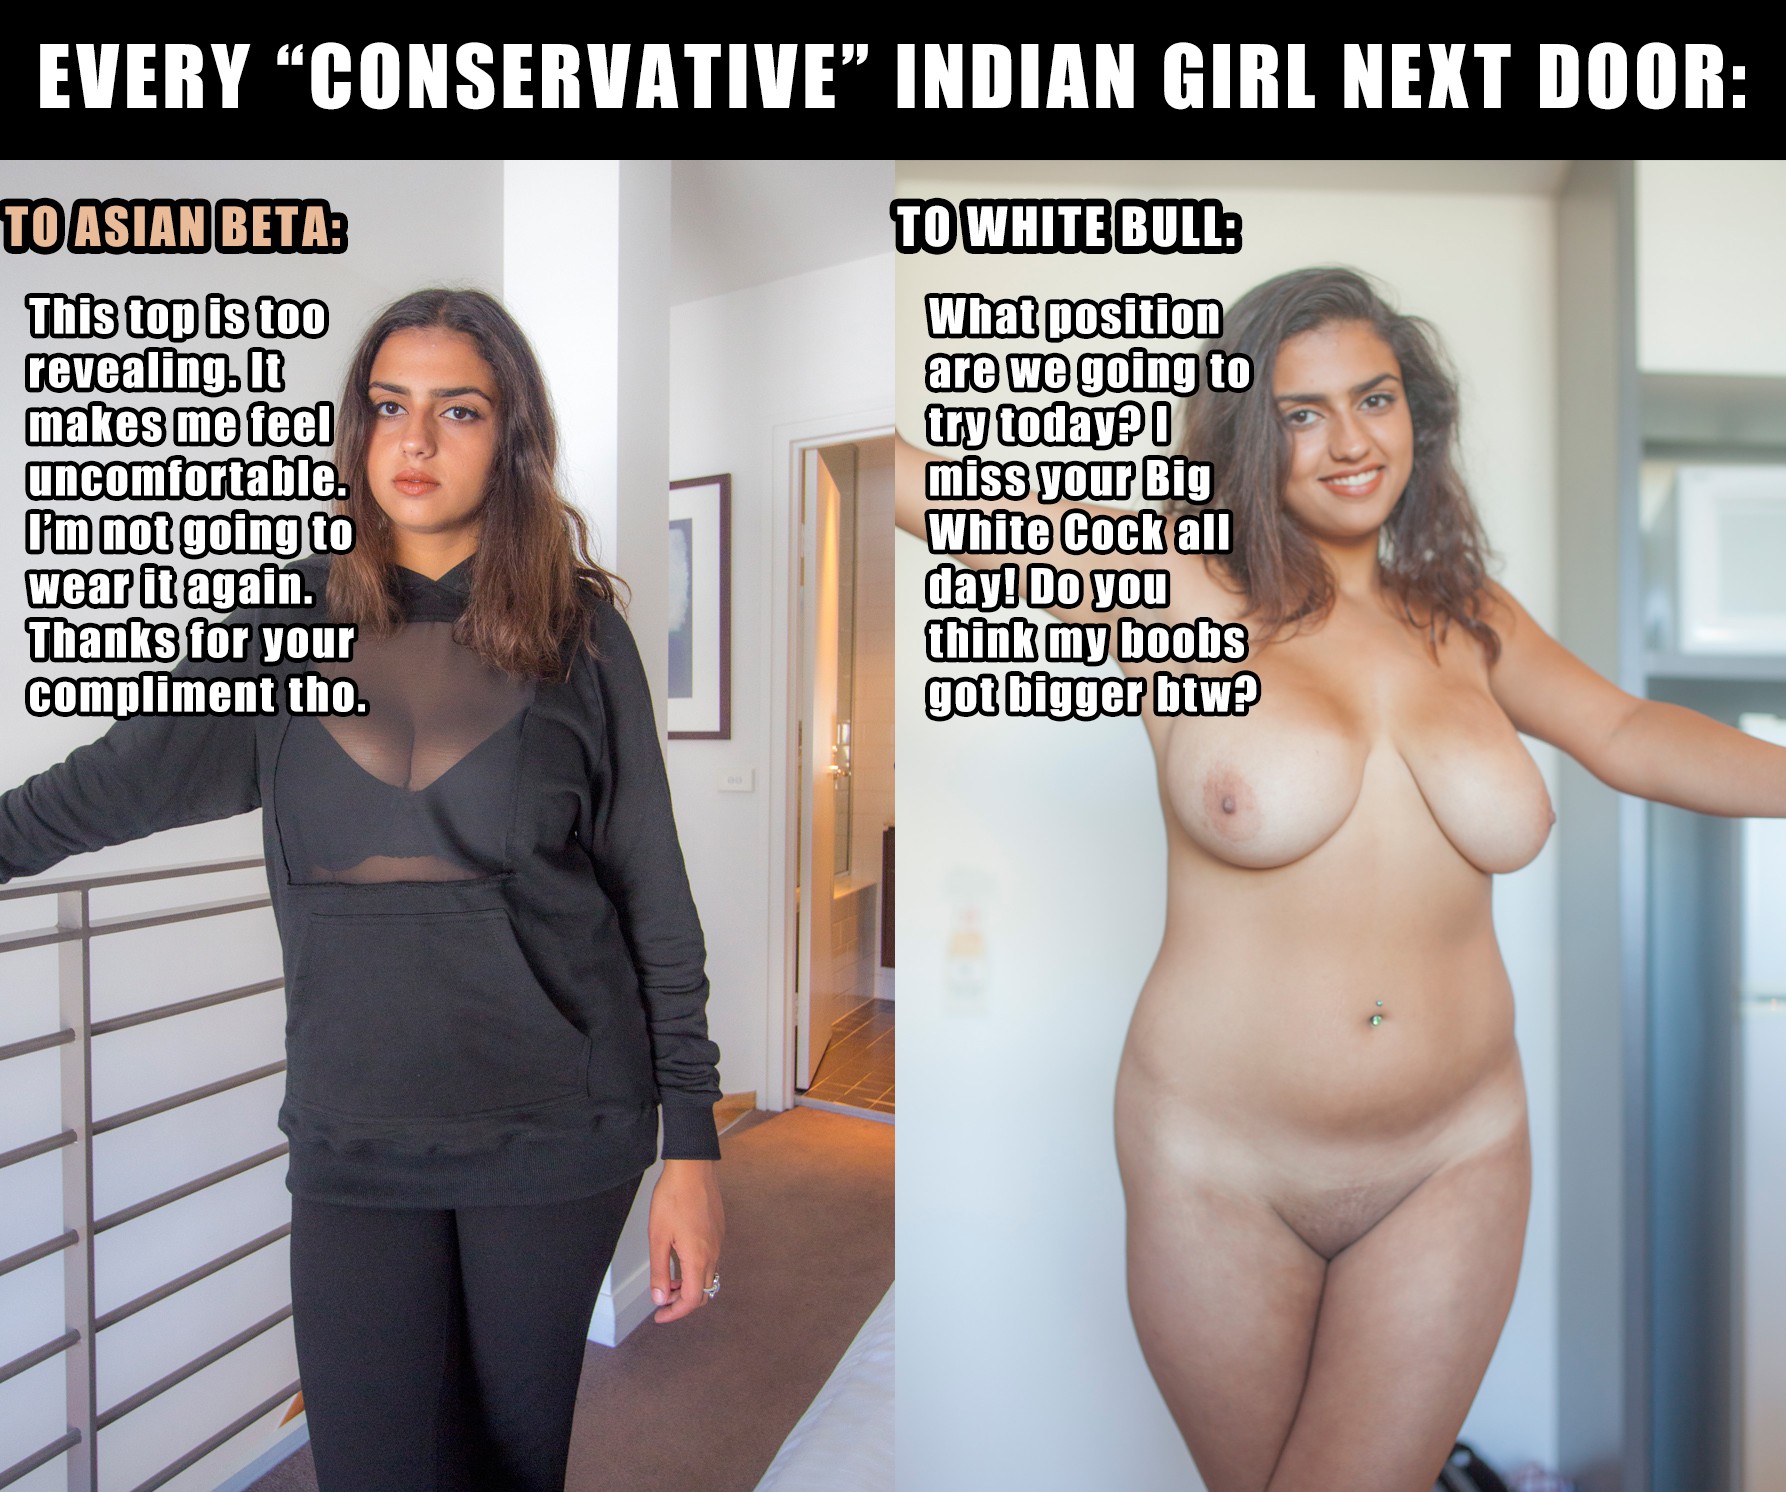 Indian Porn Caption - Indian girl next door reacts to white bull cock vs beta dick - Freakden